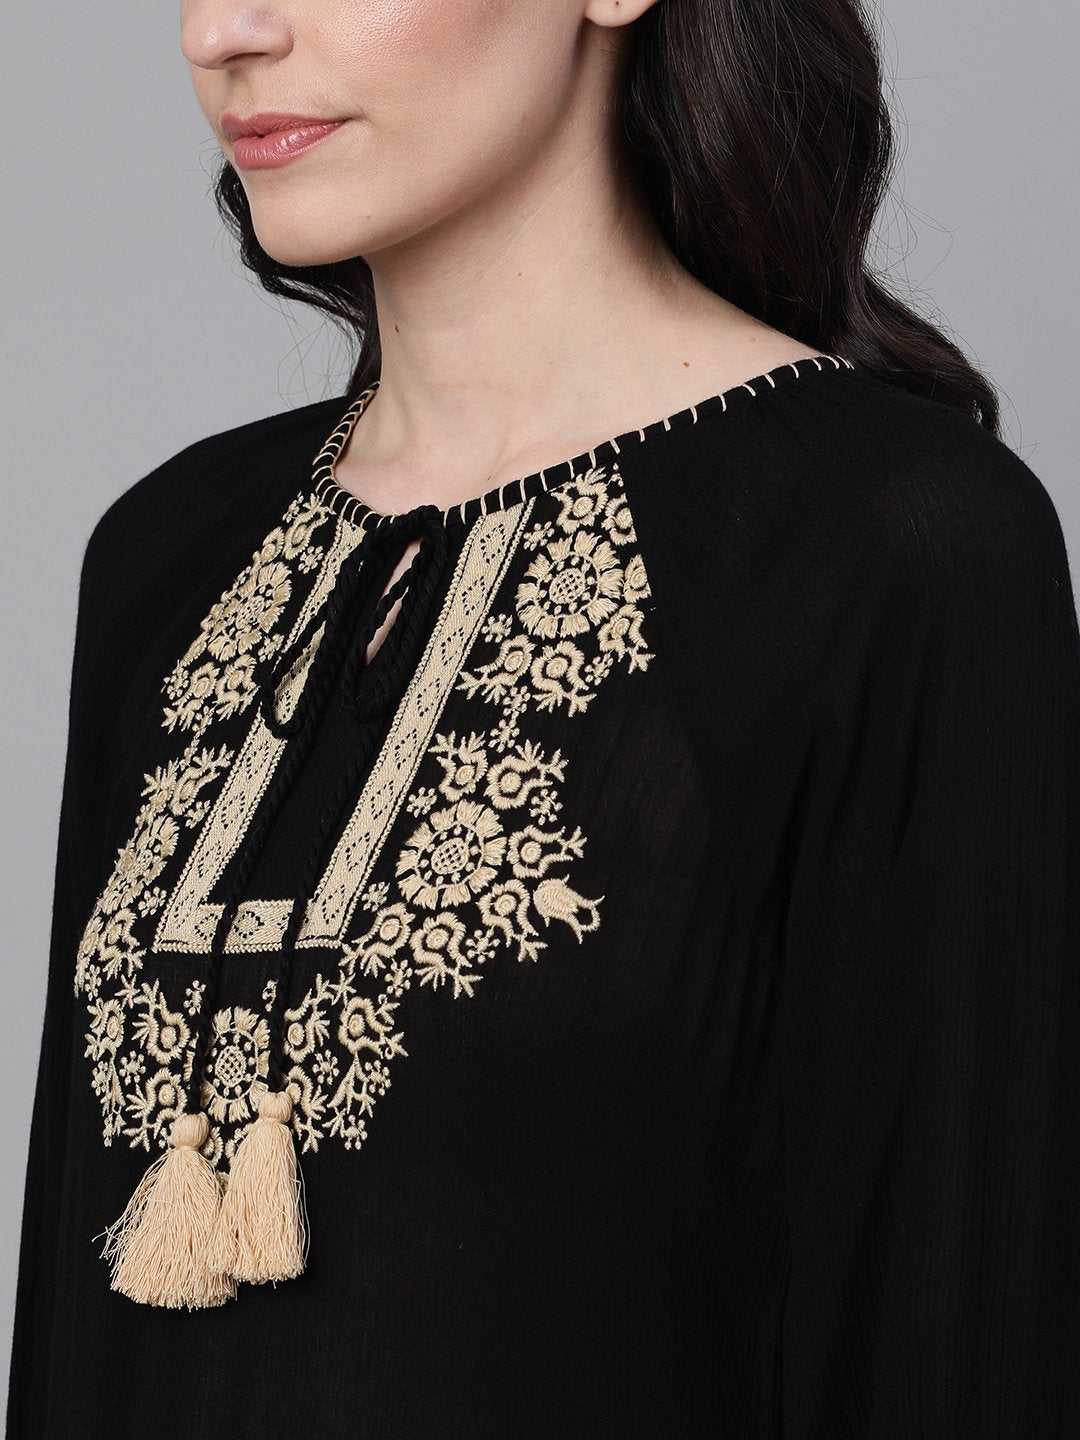 Ishin Women's Rayon Black Embroidered A-Line Dress